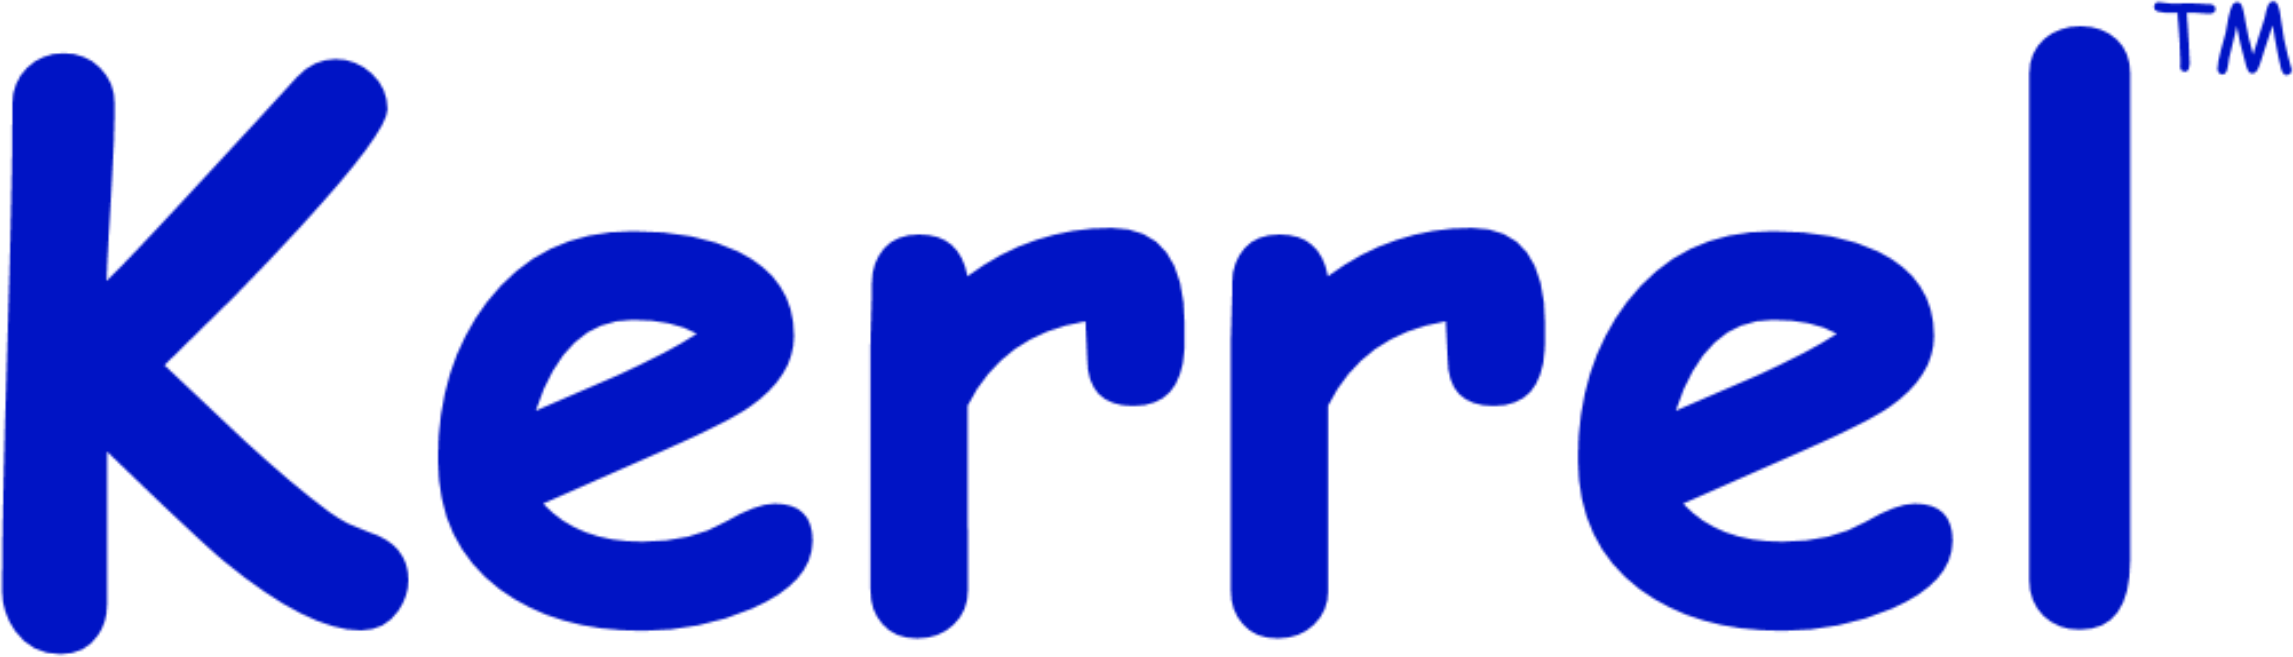 Kerrel logo